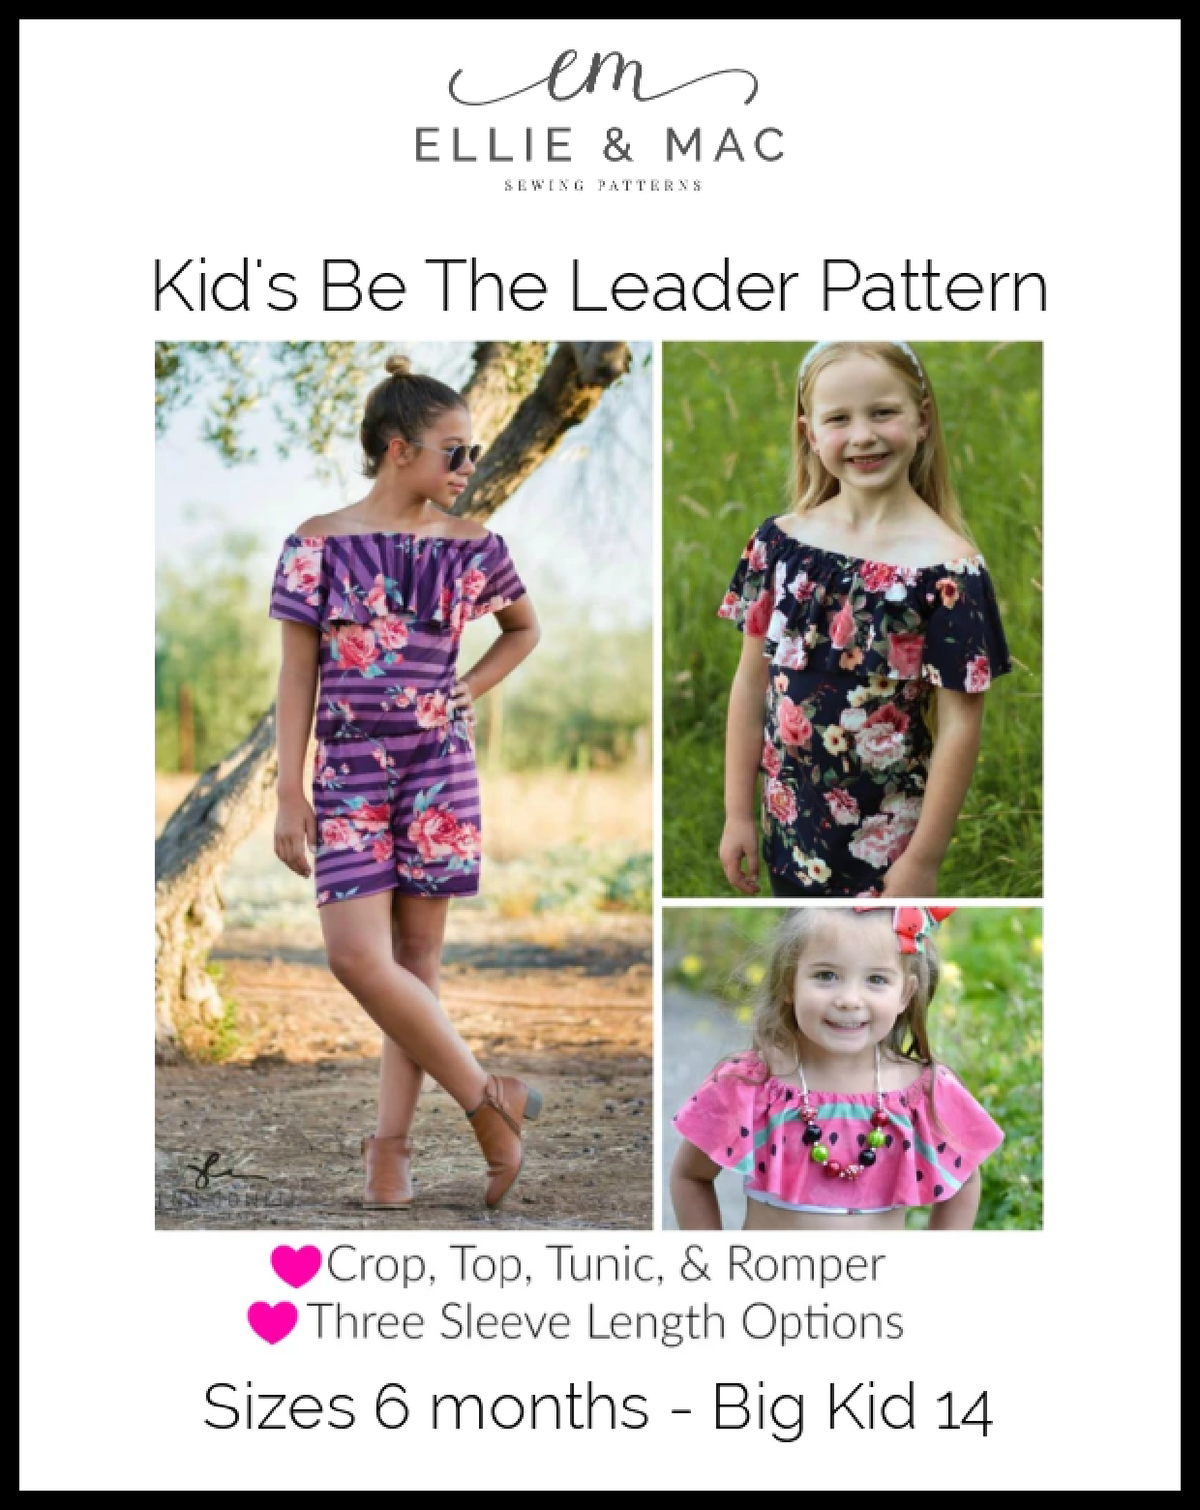 Kids Be The Leader Top & Romper Pattern